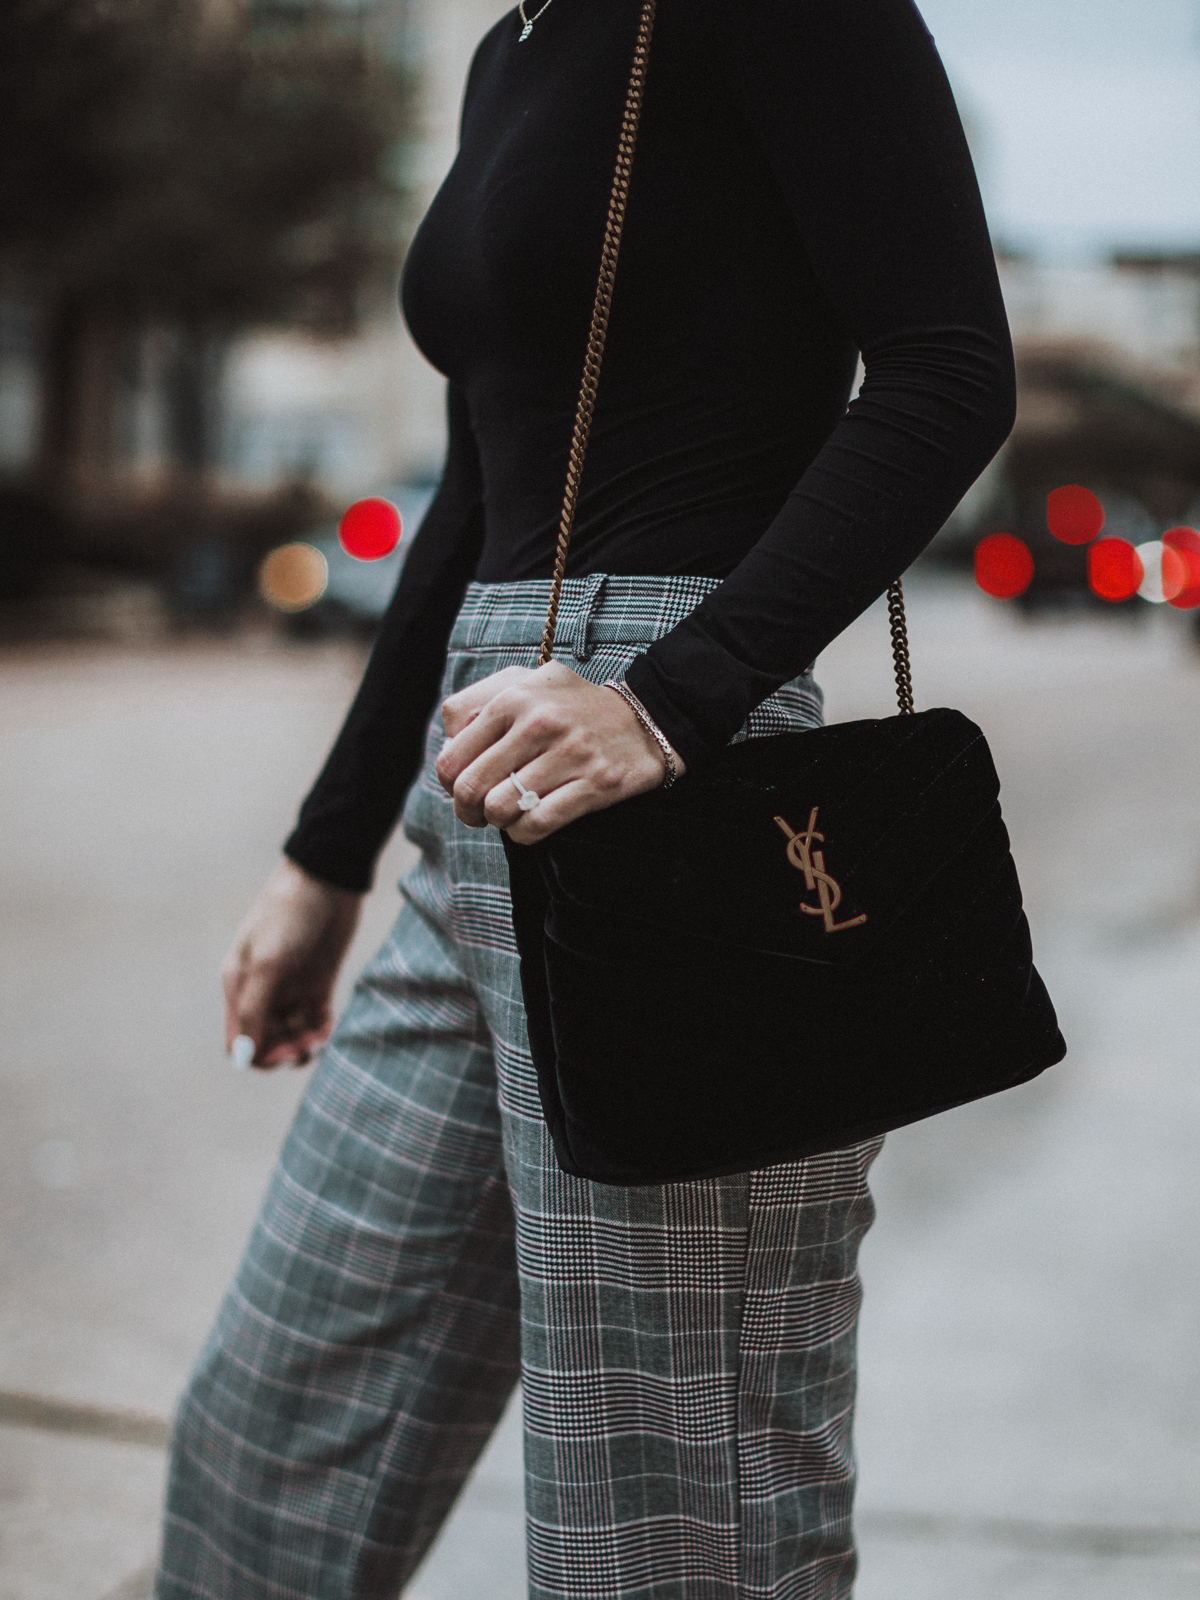 Sage Coralli wearing a black velvet YSL bag with gold hardware